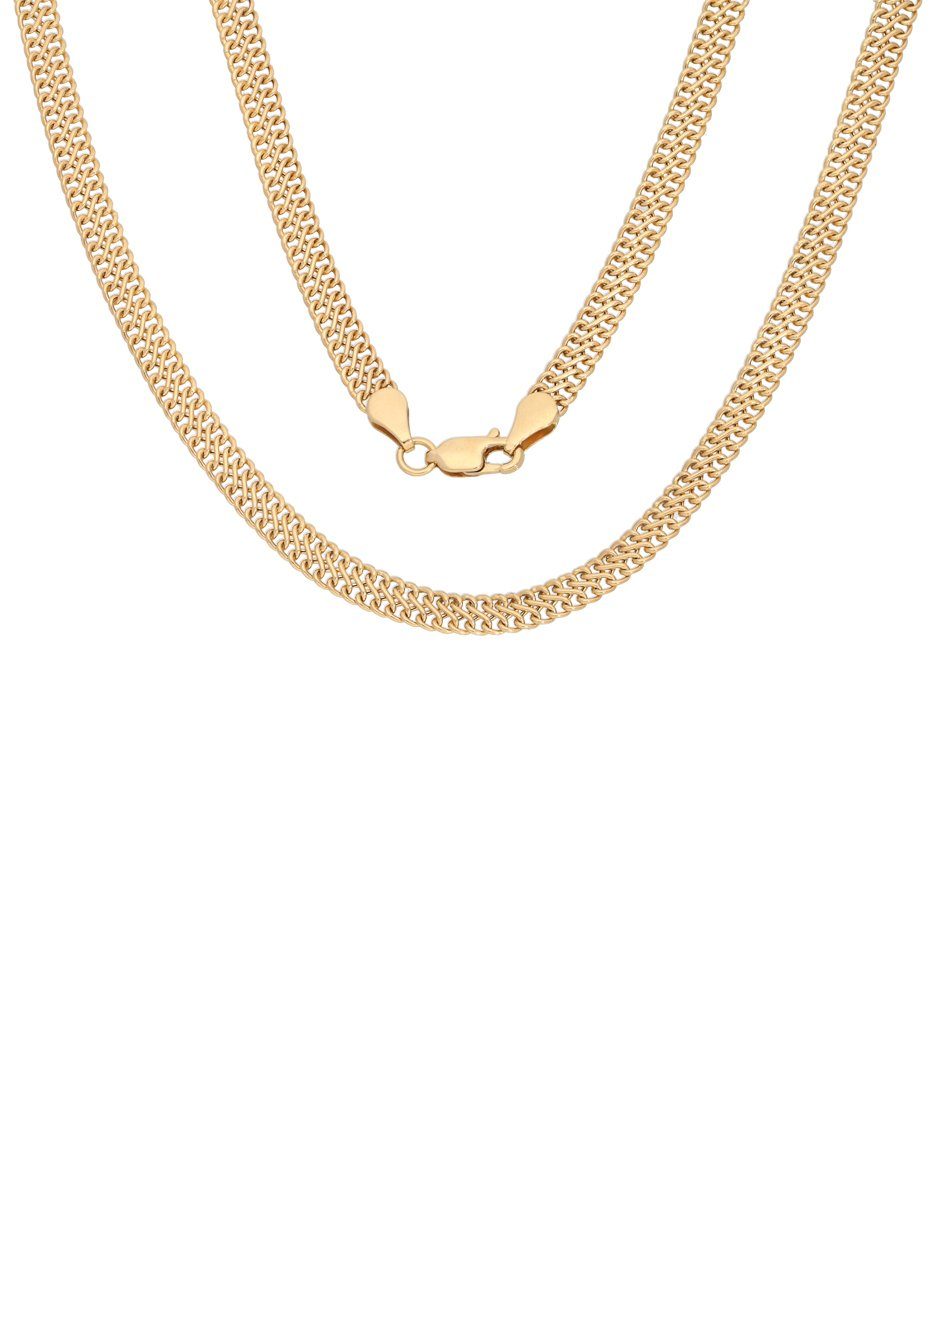 Firetti Goldkette Schmuck Geschenk Gold 375 Halsschmuck Halskette Goldkette Doppelpanzer, zu Kleid, Shirt, Jeans, Sneaker! Anlass Geburtstag Weihnachten | Ketten ohne Anhänger